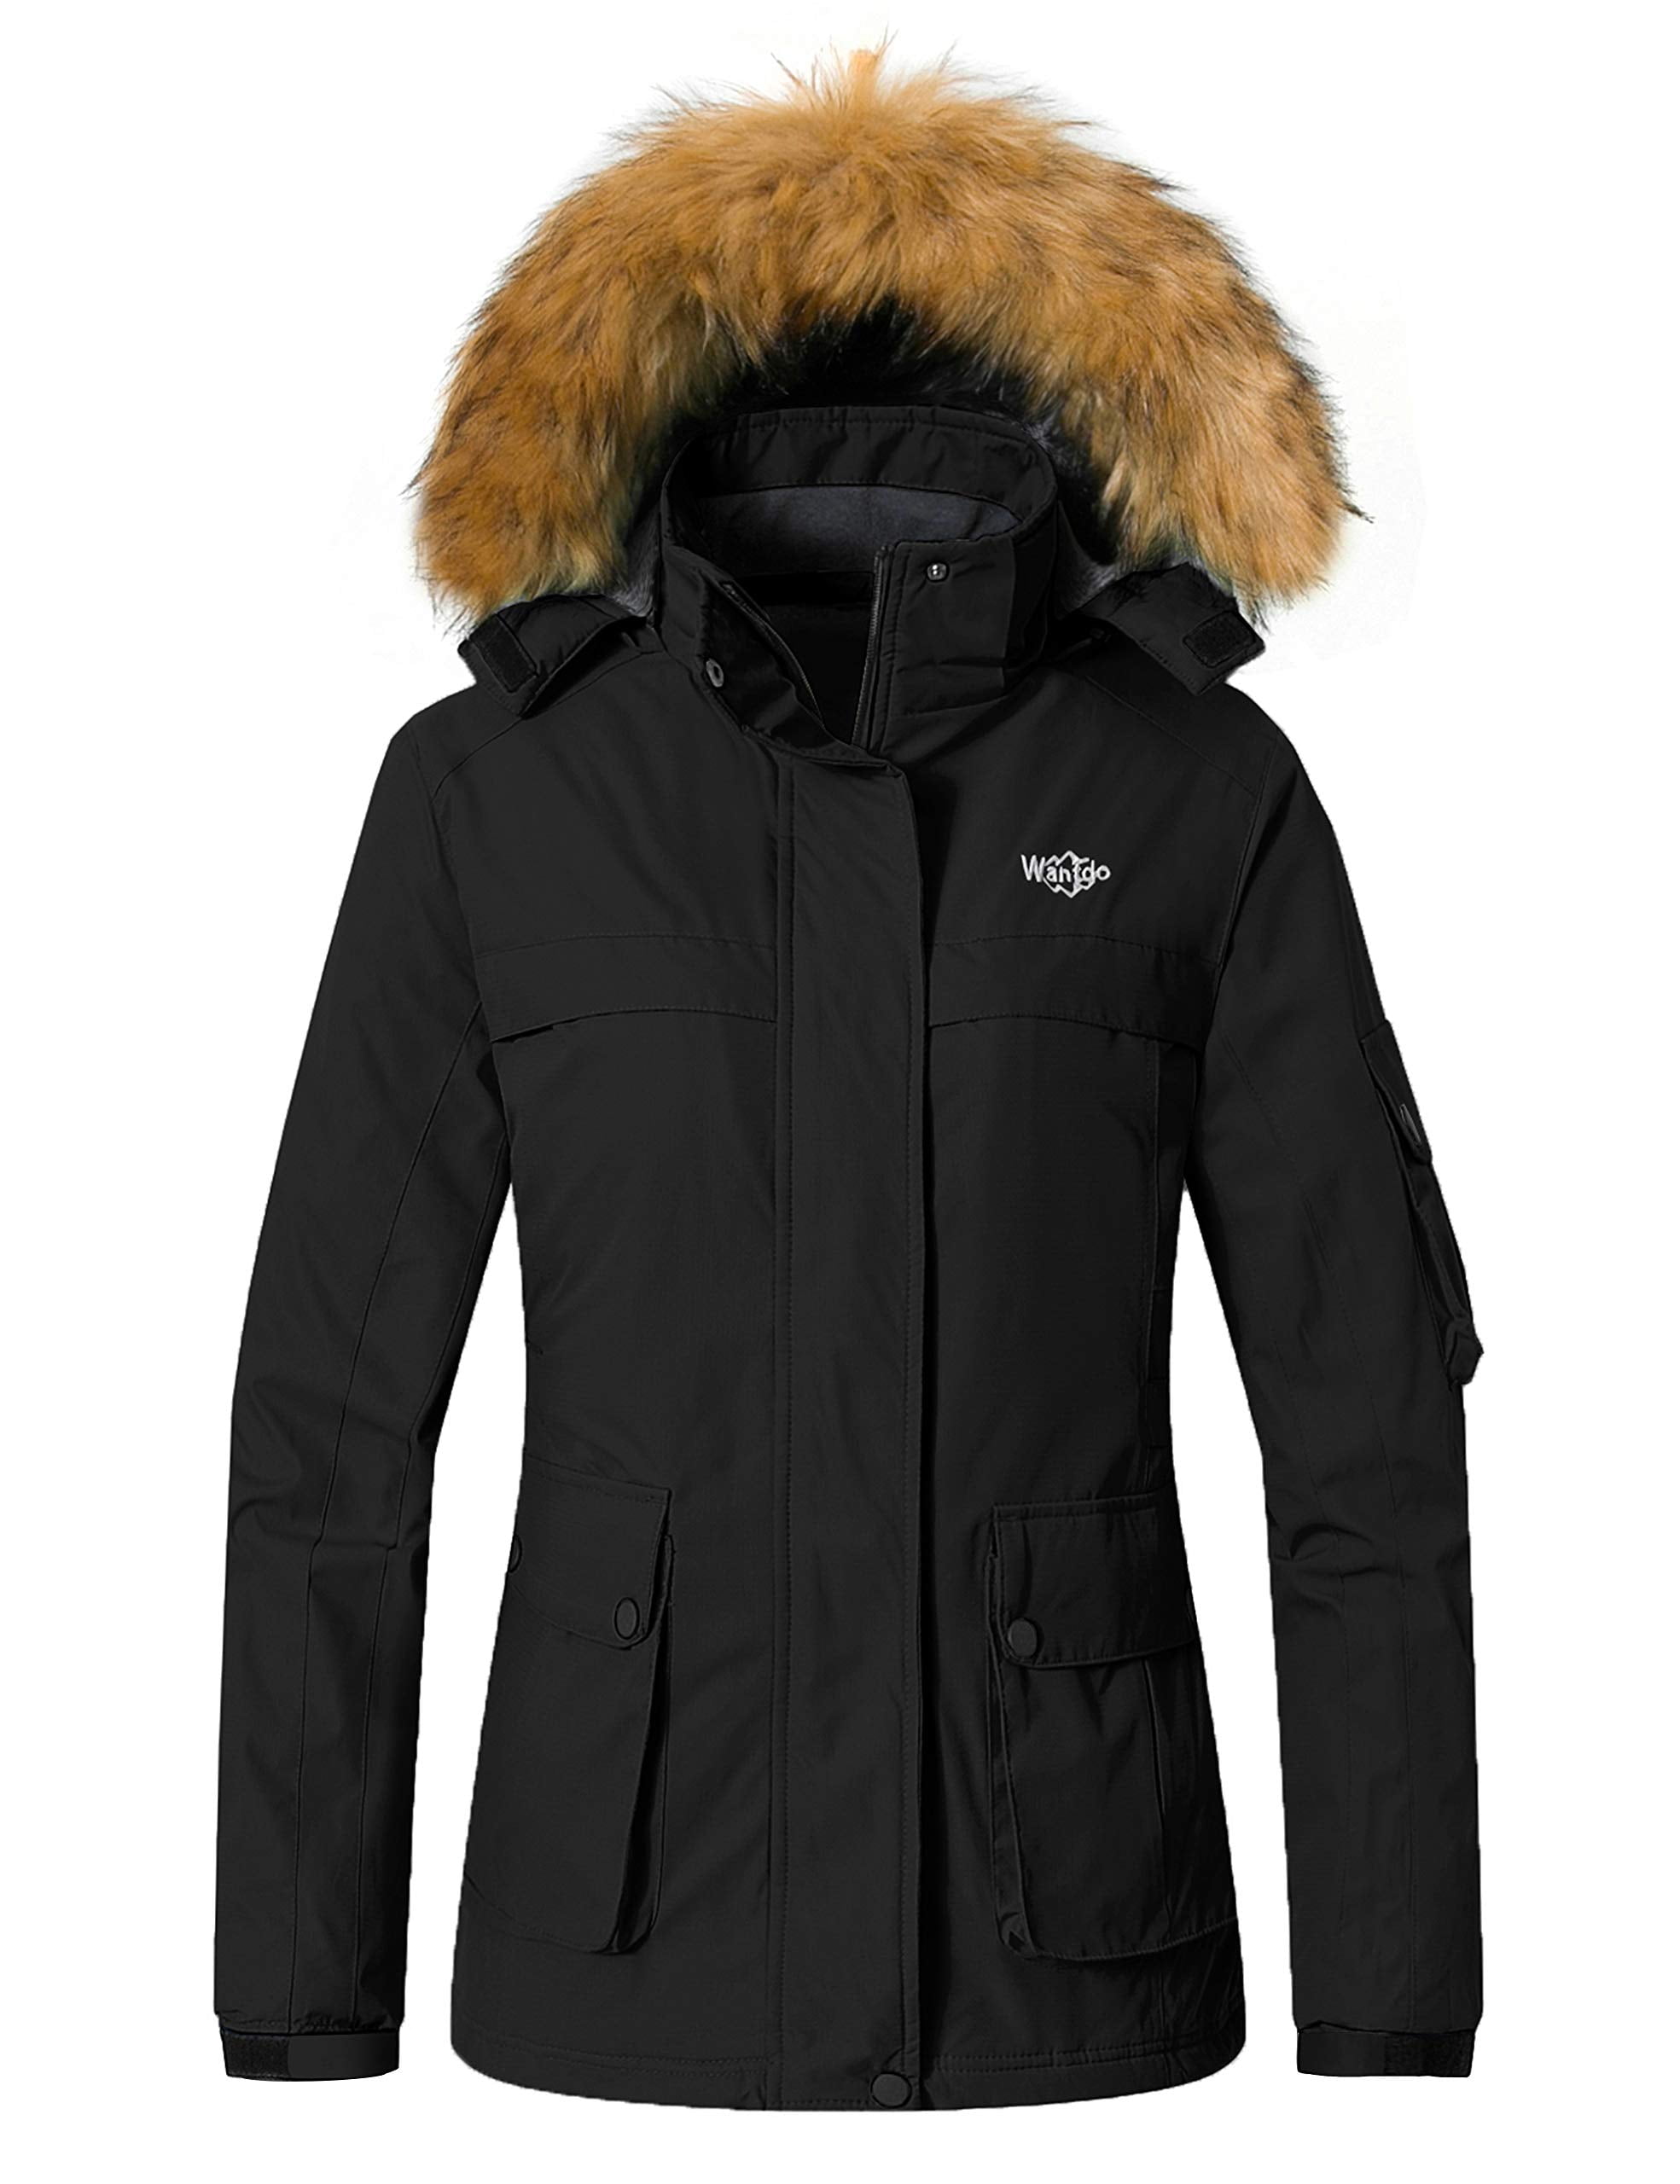 Wantdo Girl's 3 in 1 Waterproof Ski Jacket Windproof Warm Fleece Winter Snow Coat Hooded Snowboarding Jacket Raincoat 